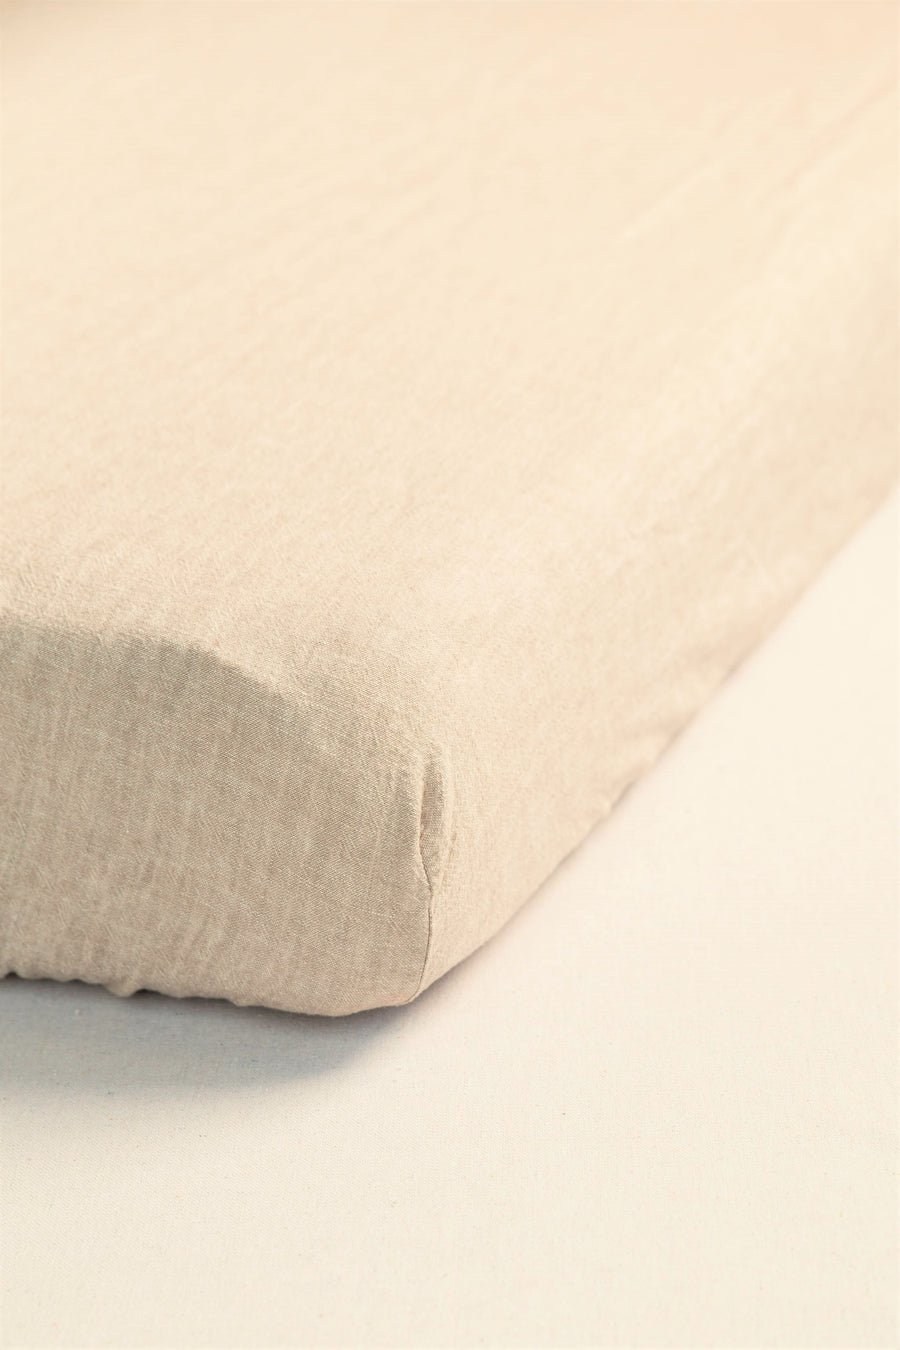 RV Full Sheet Sets, Organic 100% Cotton